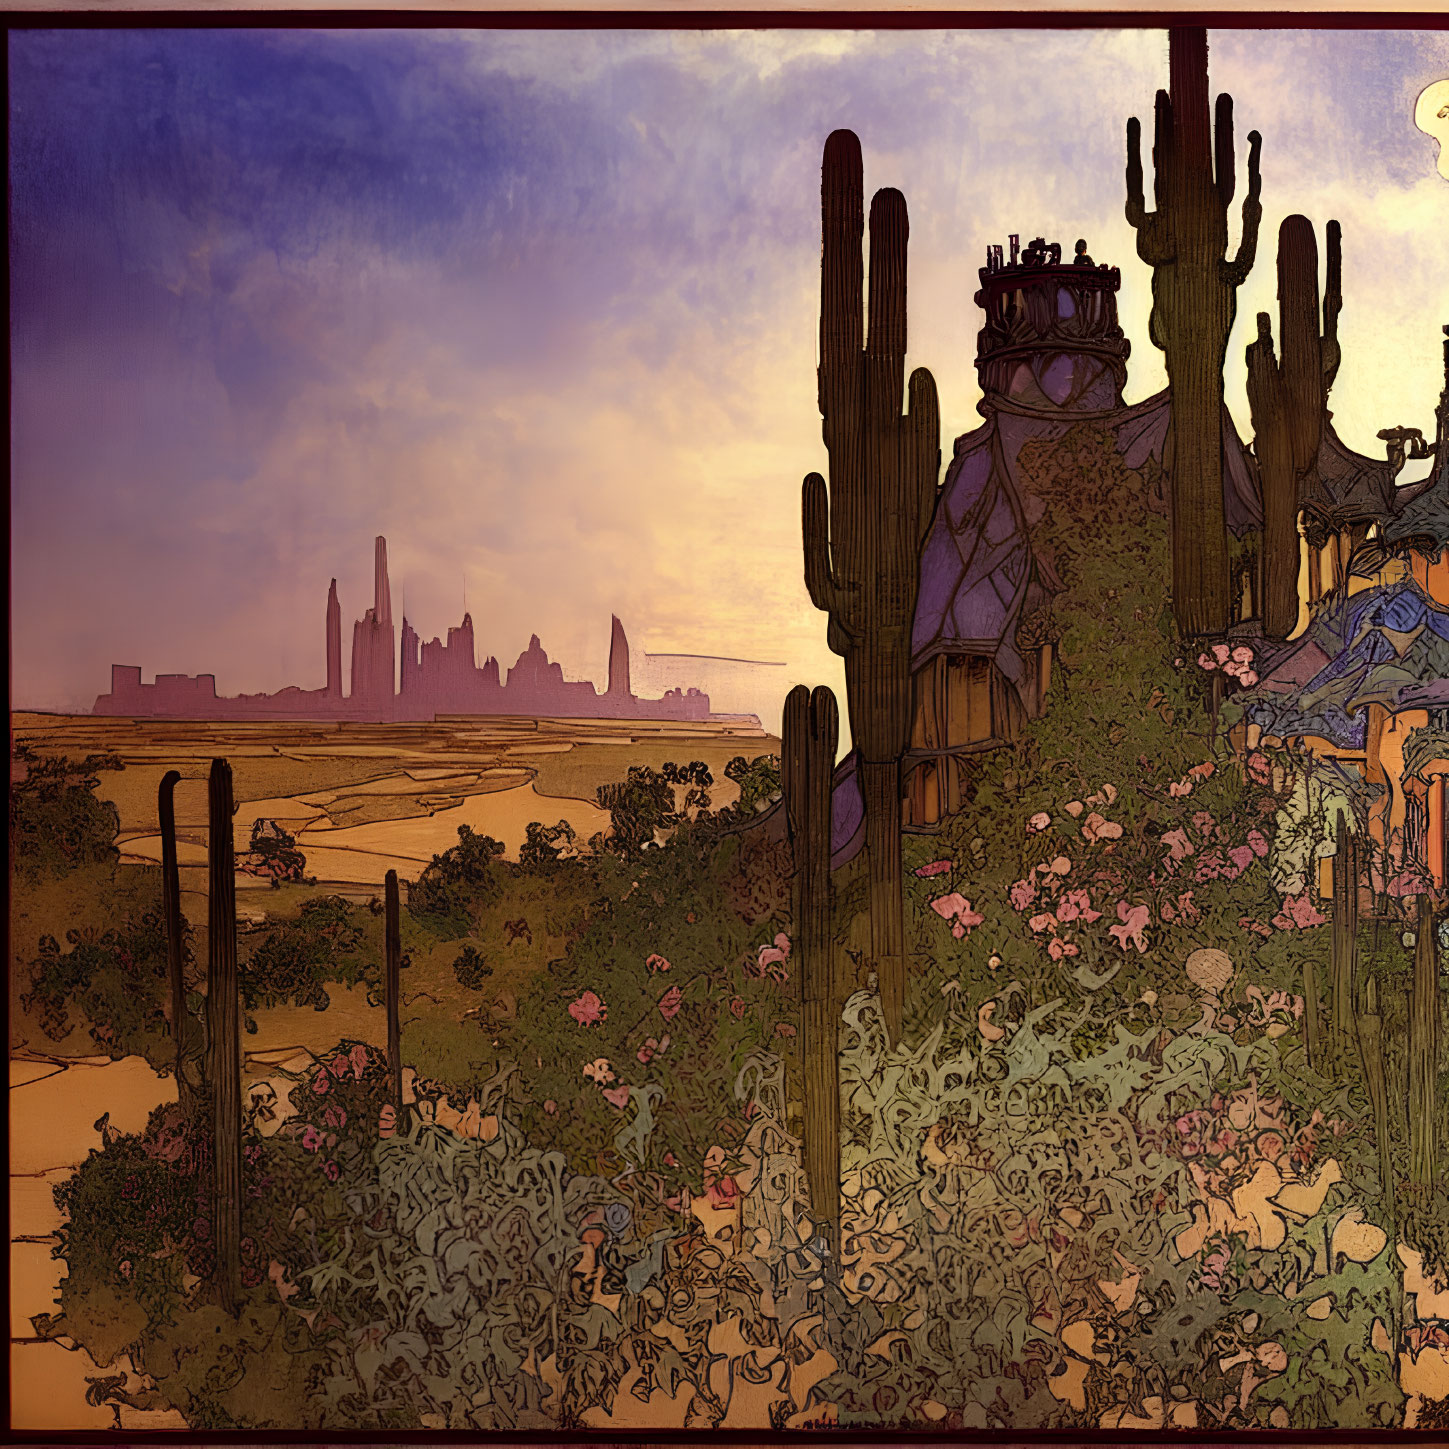 Desert sunset illustration with cacti, house, city skyline, orange and purple sky